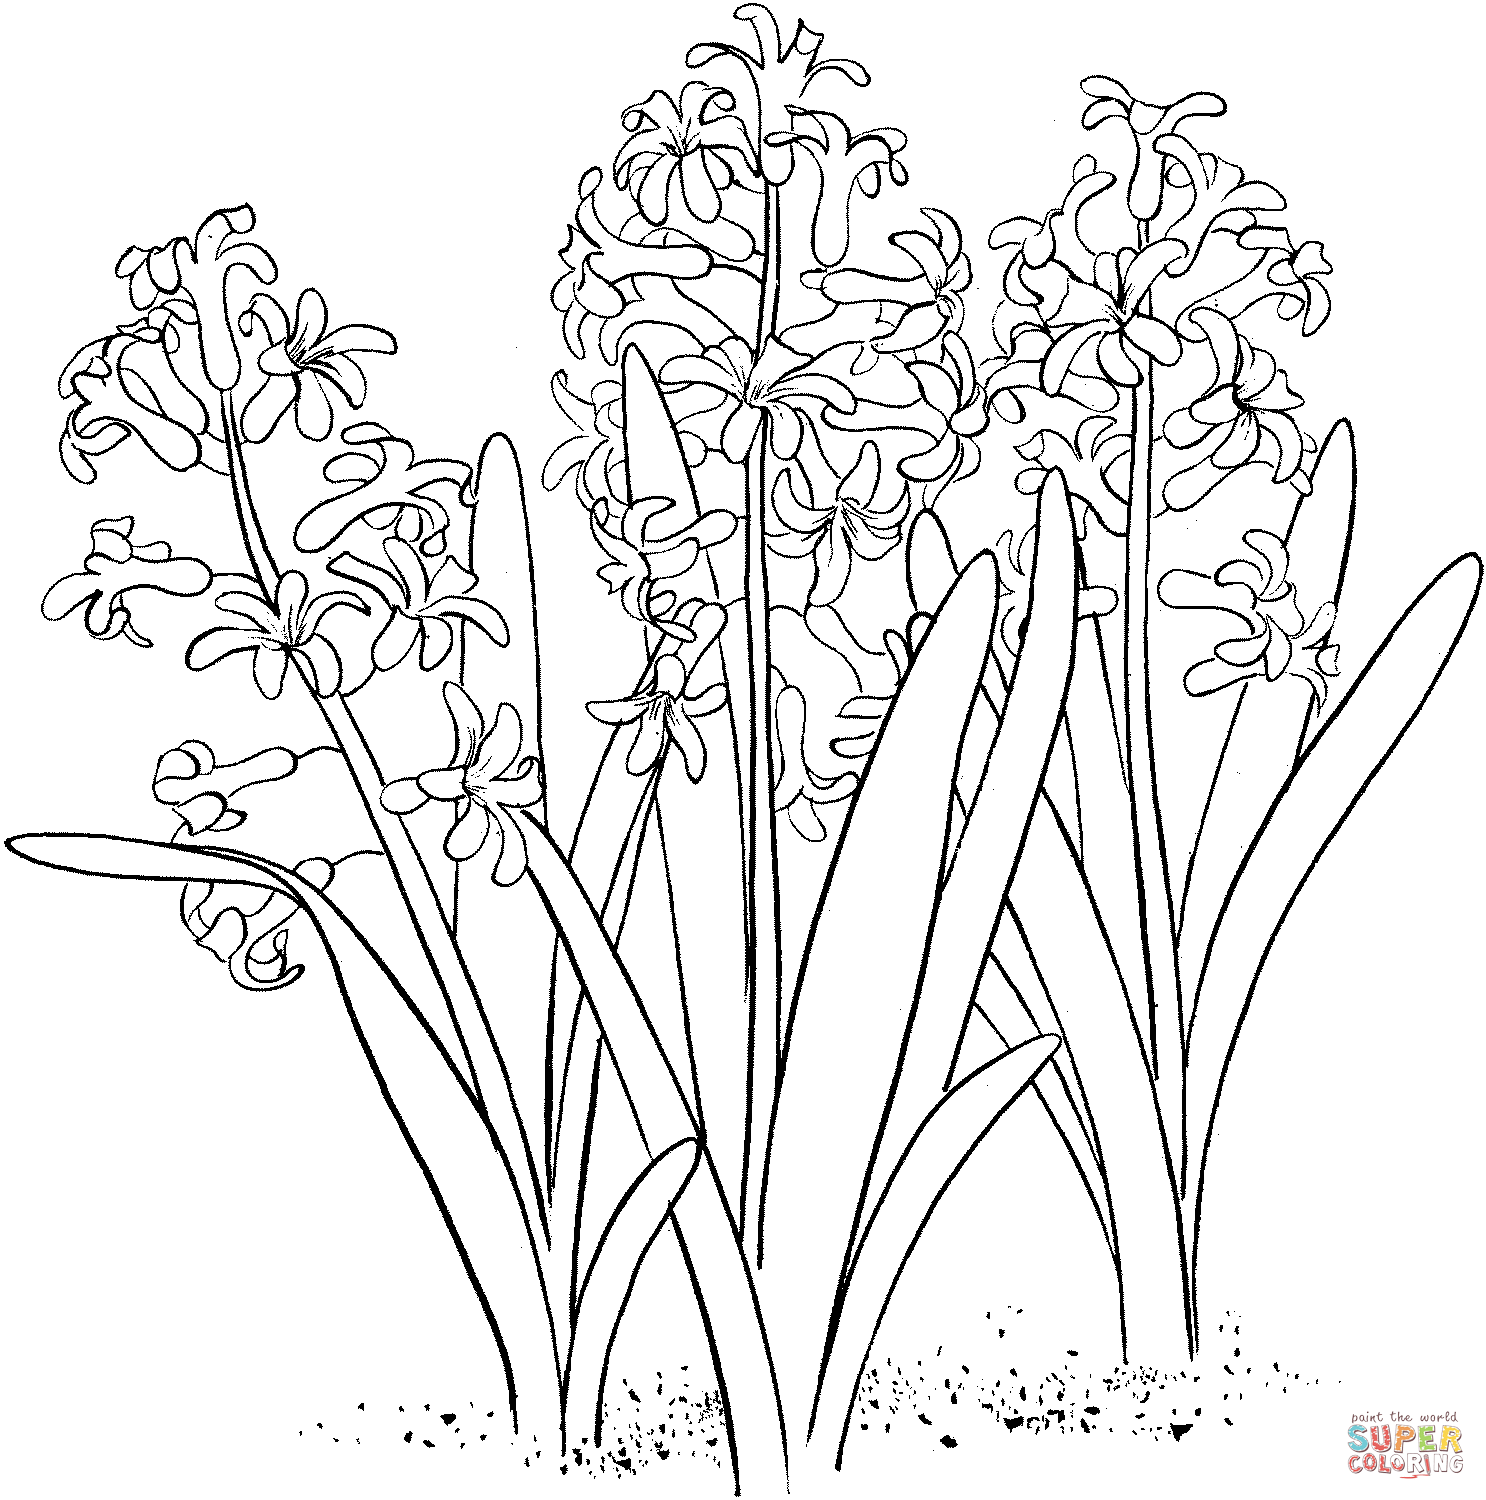 Hyacinthus orientalis أو صفير الحديقة المشترك من Hyacinthus